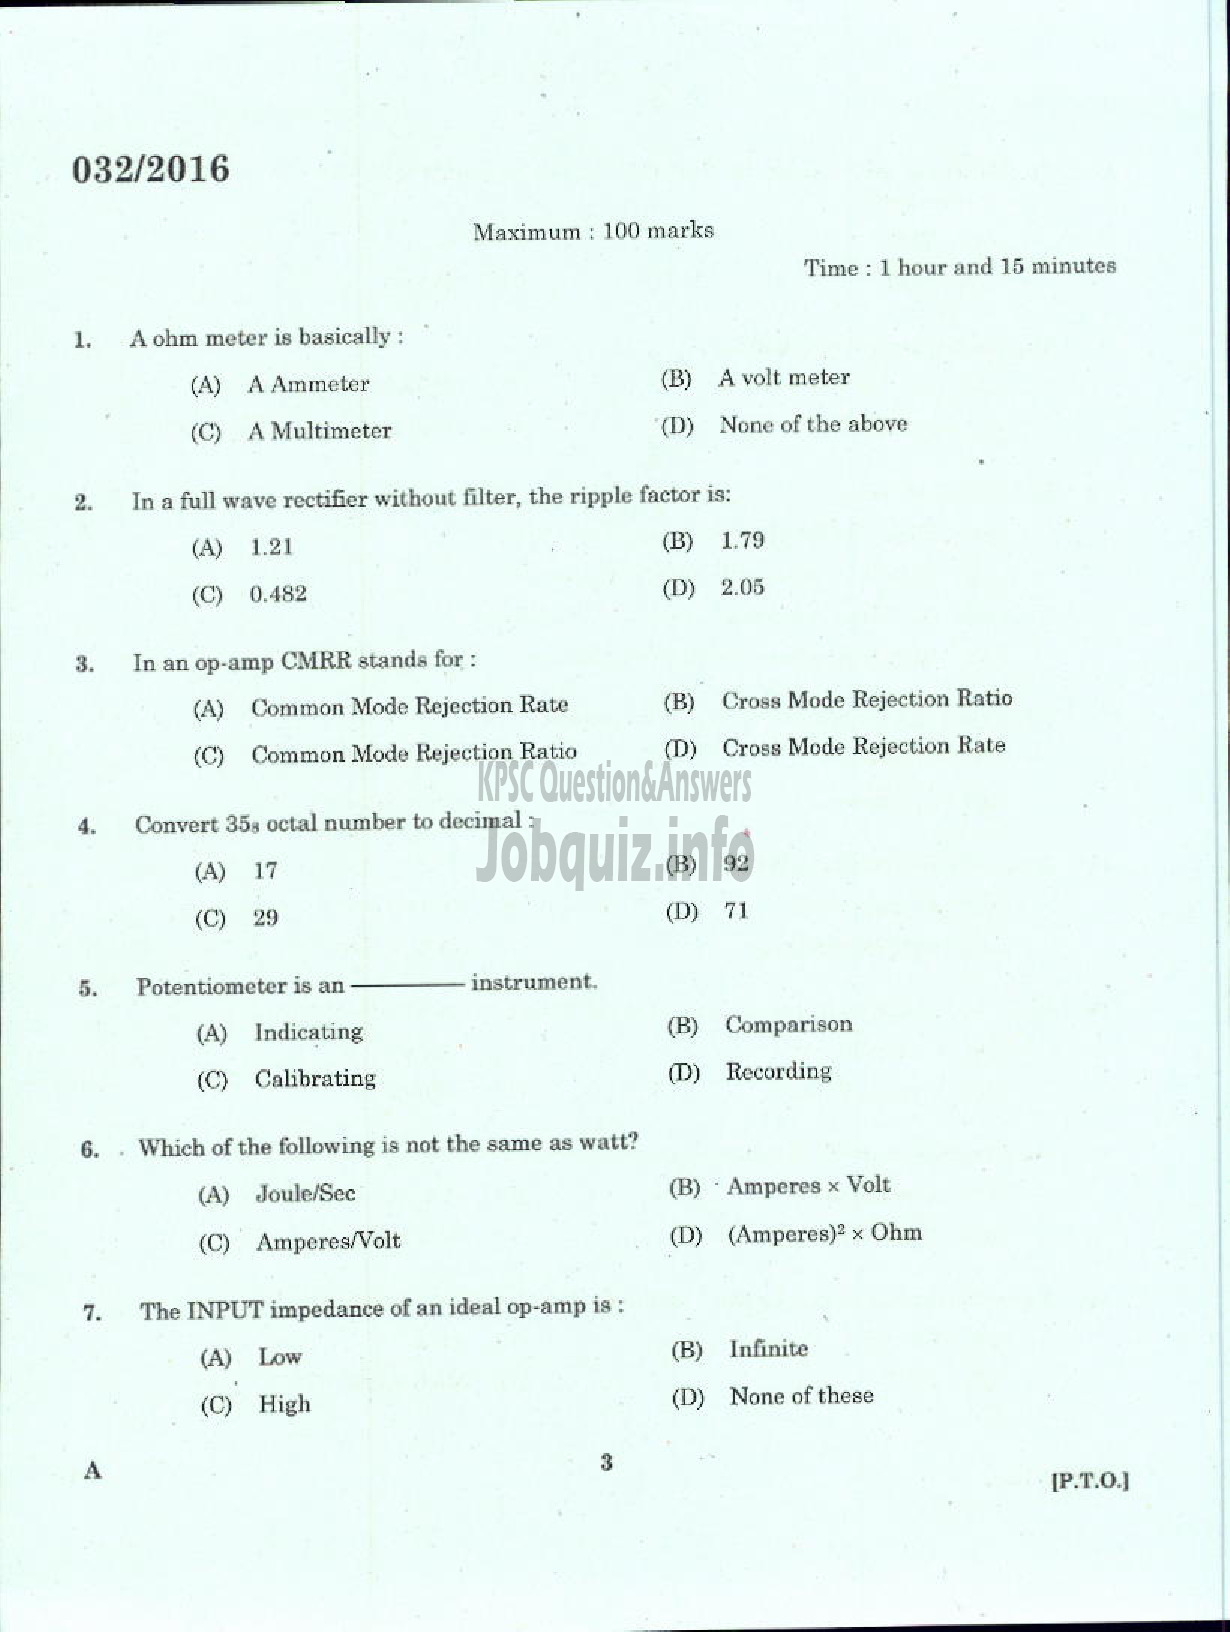 Kerala PSC Question Paper - TRADESMAN INSTRUMENT MECHANIC TECHNICAL EDUCATION-1